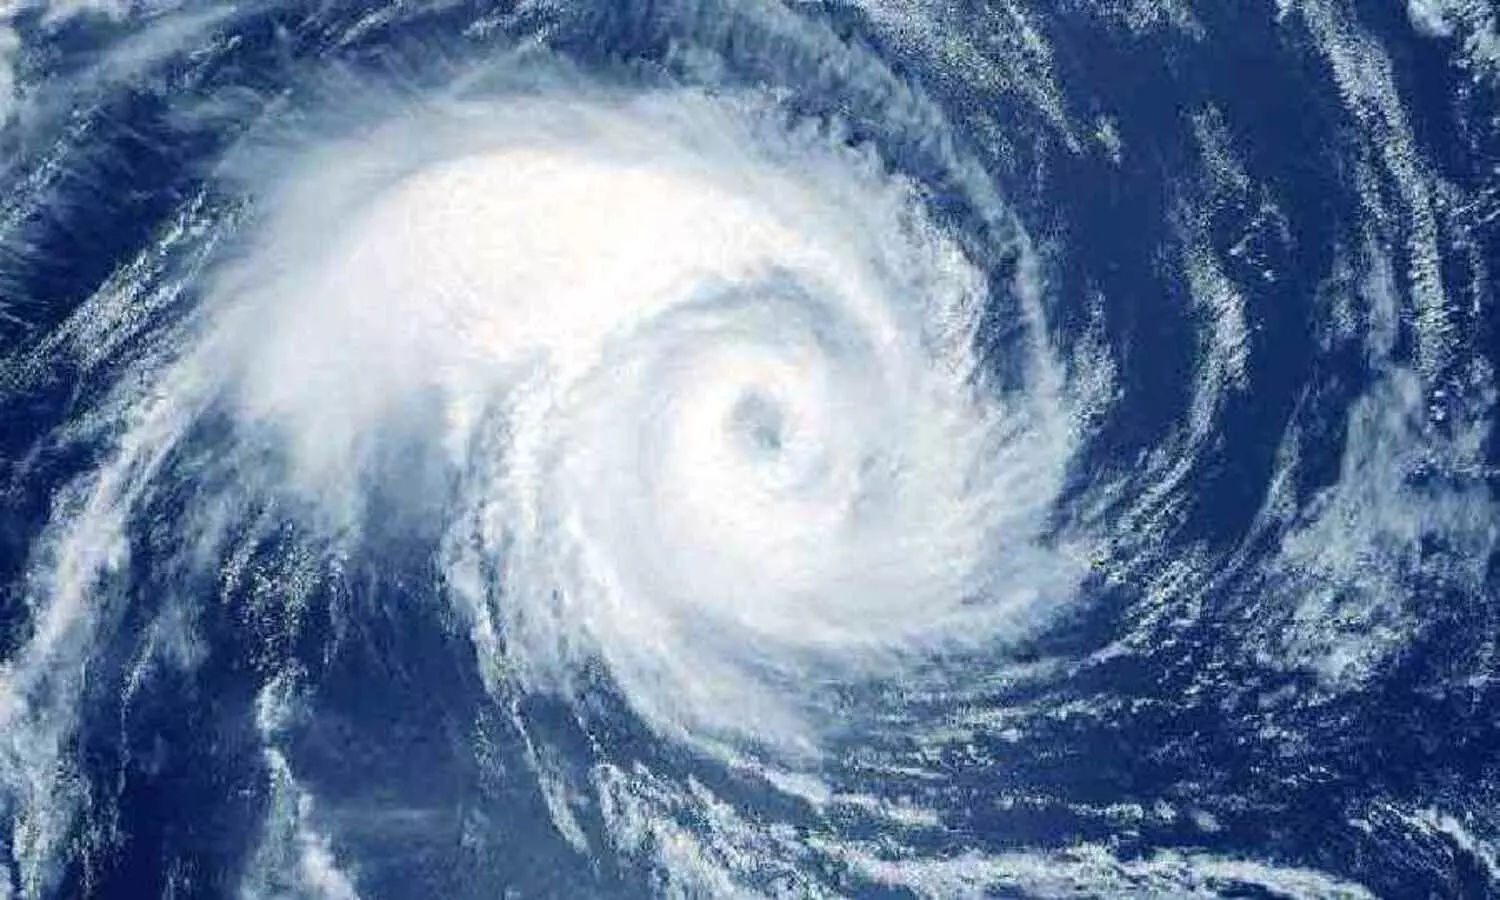 High alert issued in Bangladesh as approaching cyclone Mocha turns very dangerous